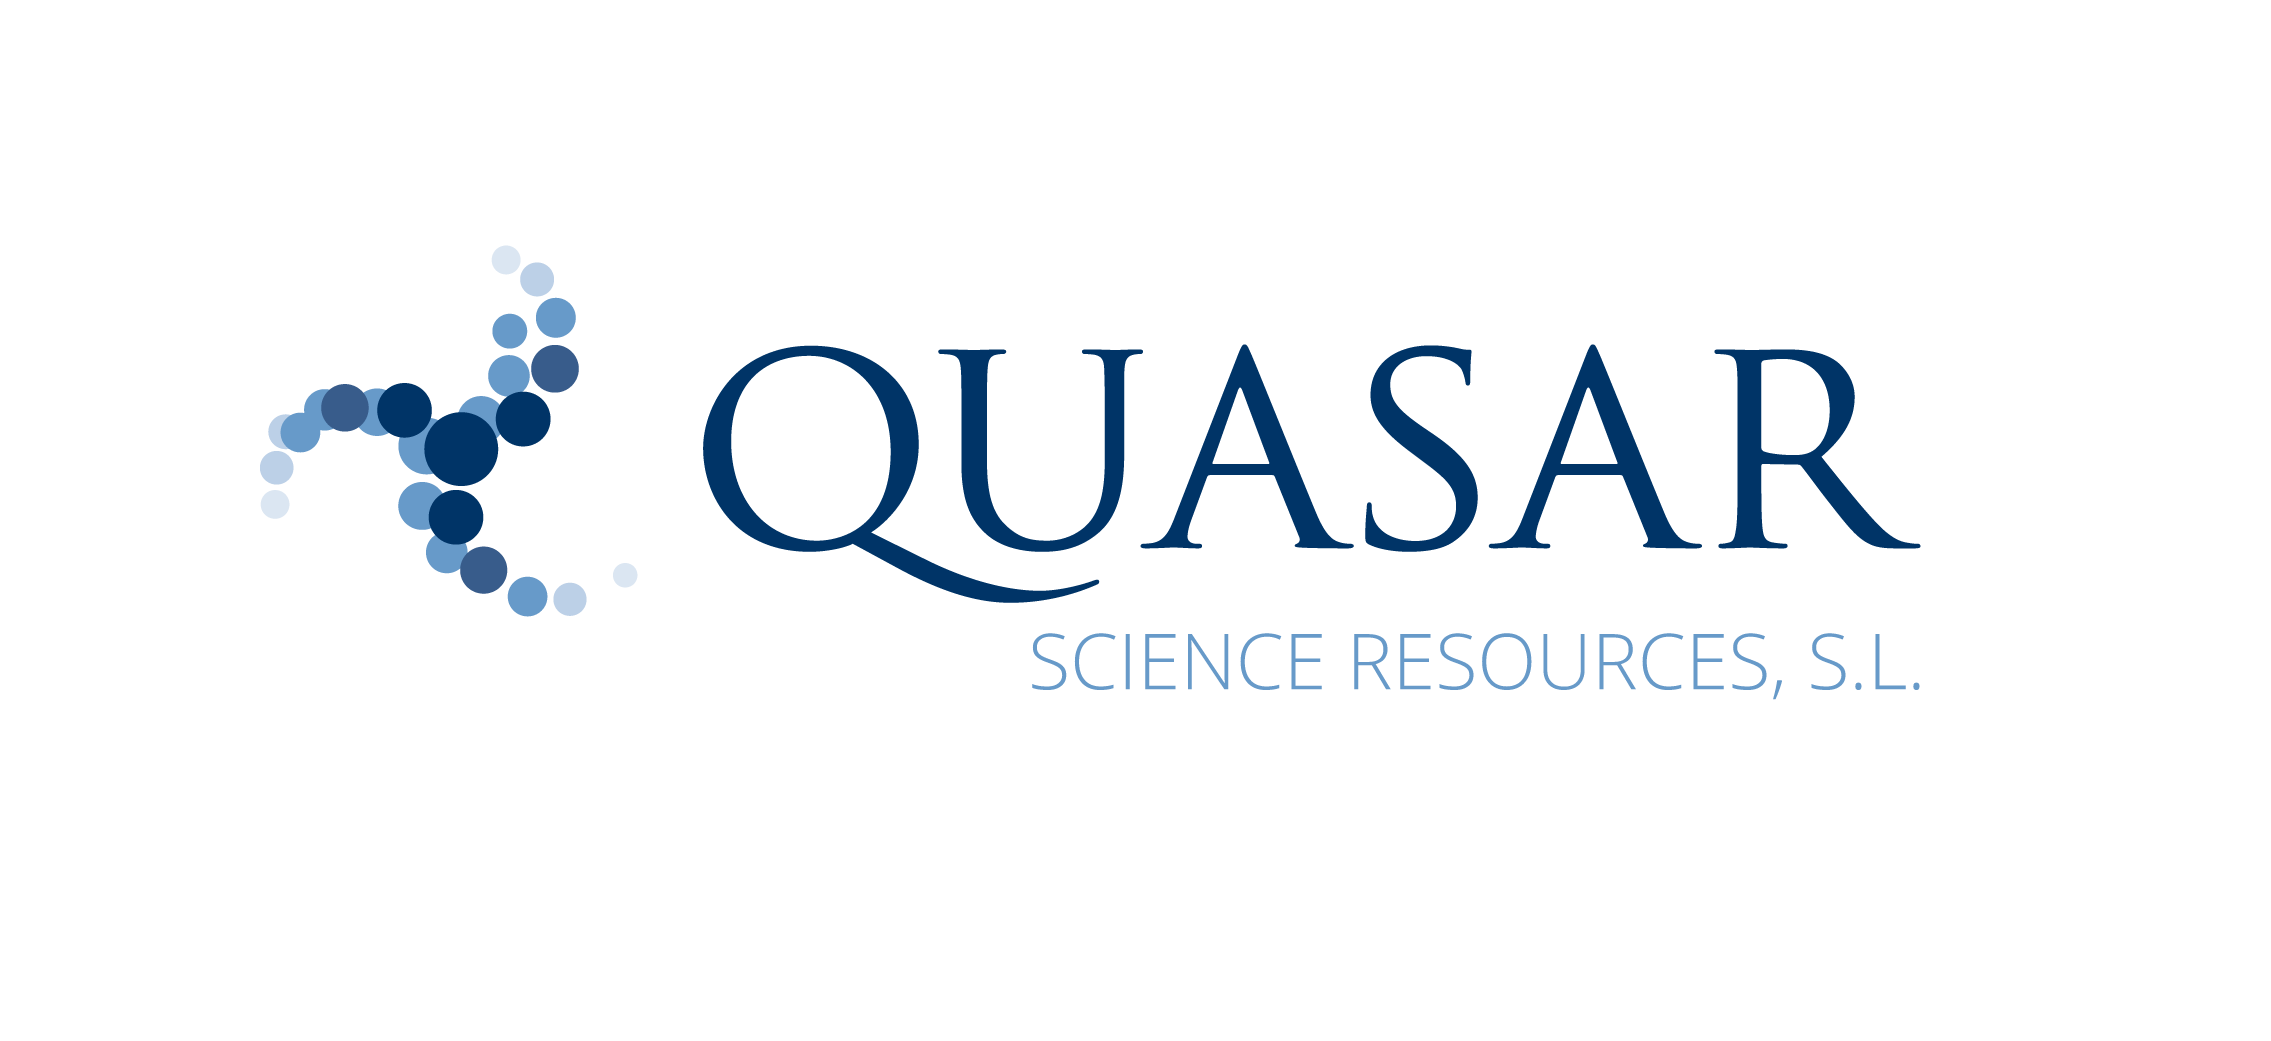 image of quasar science resources